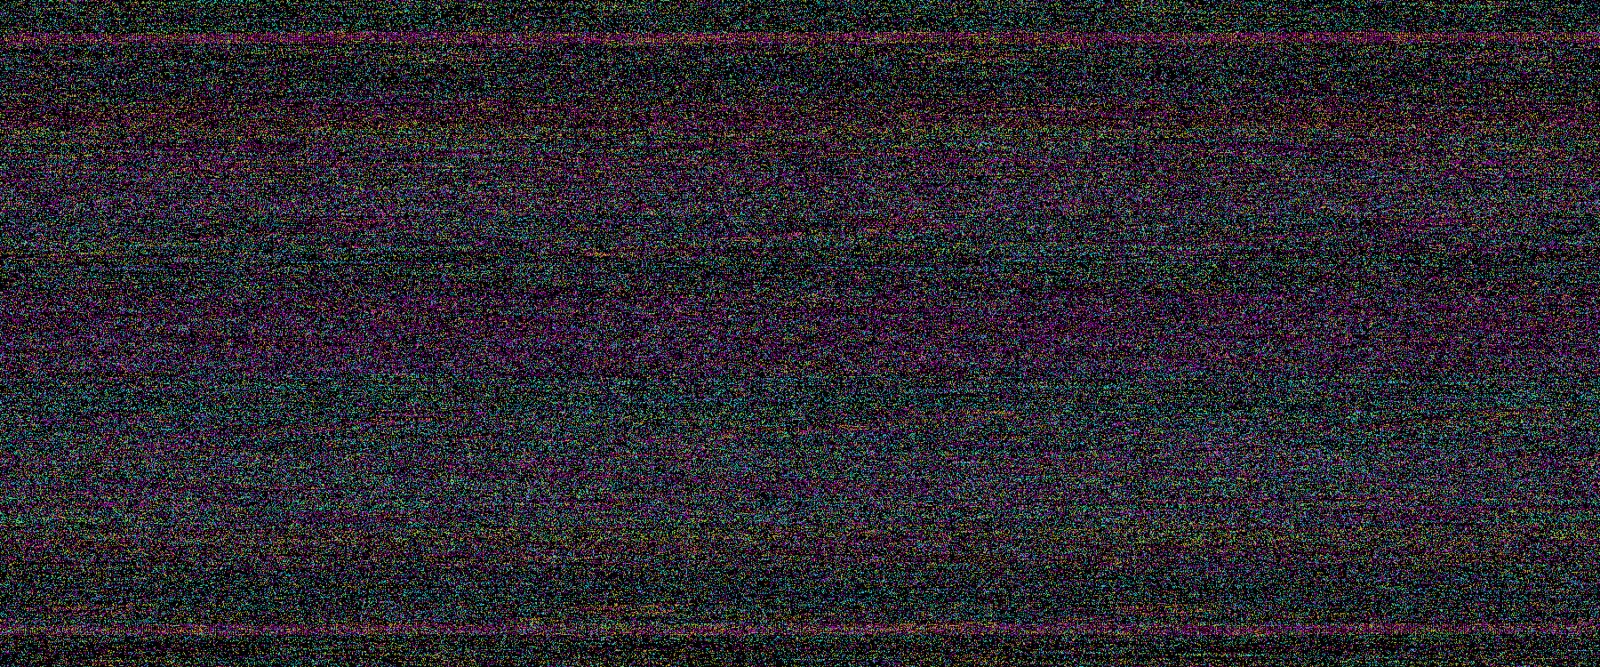 Photoshop Glitch 2: grainy nebula of colorful pixels